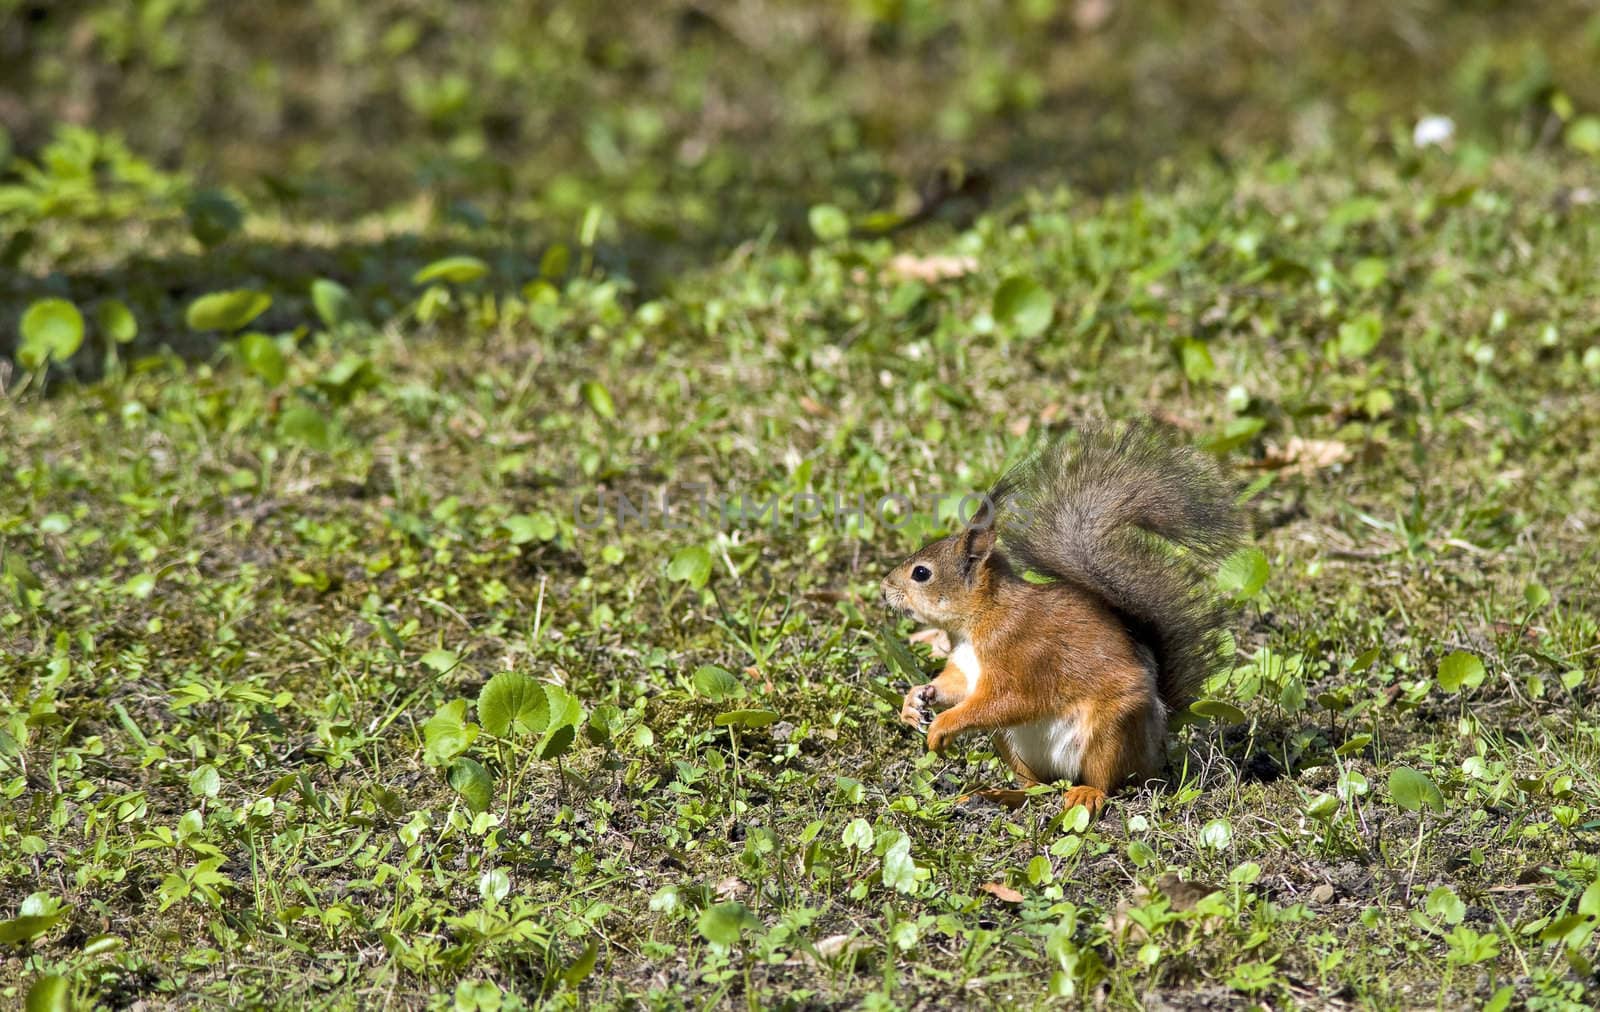 Sweetly pretty squirrel with bushy tail